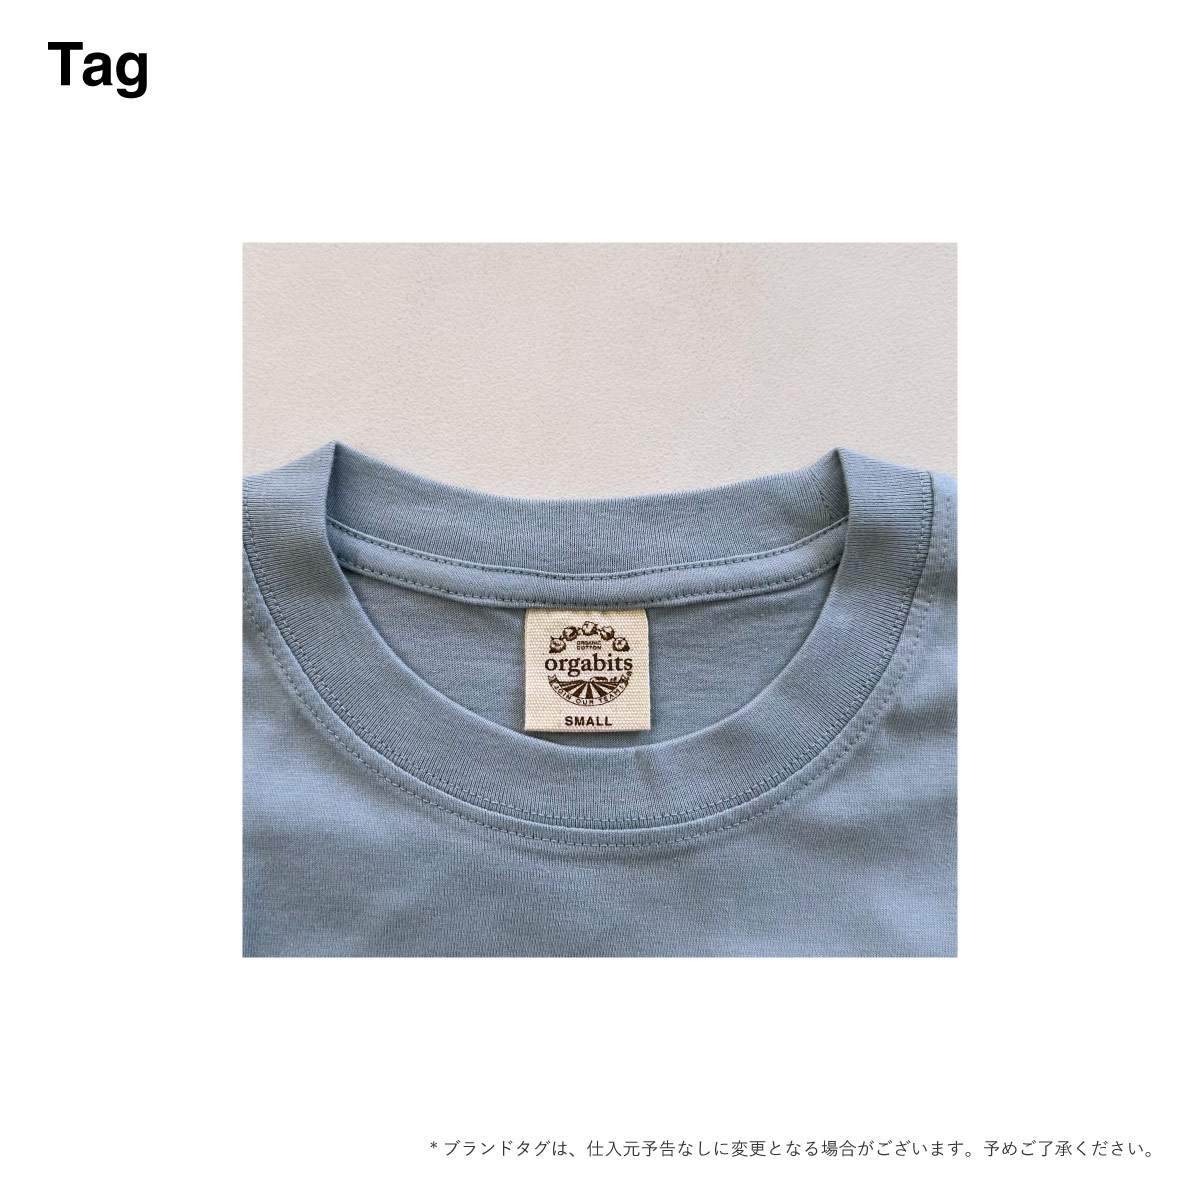 TRUSS トラス 5.3 oz オーガニック コットン ロングスリーブ Tシャツ (品番OGL-914)